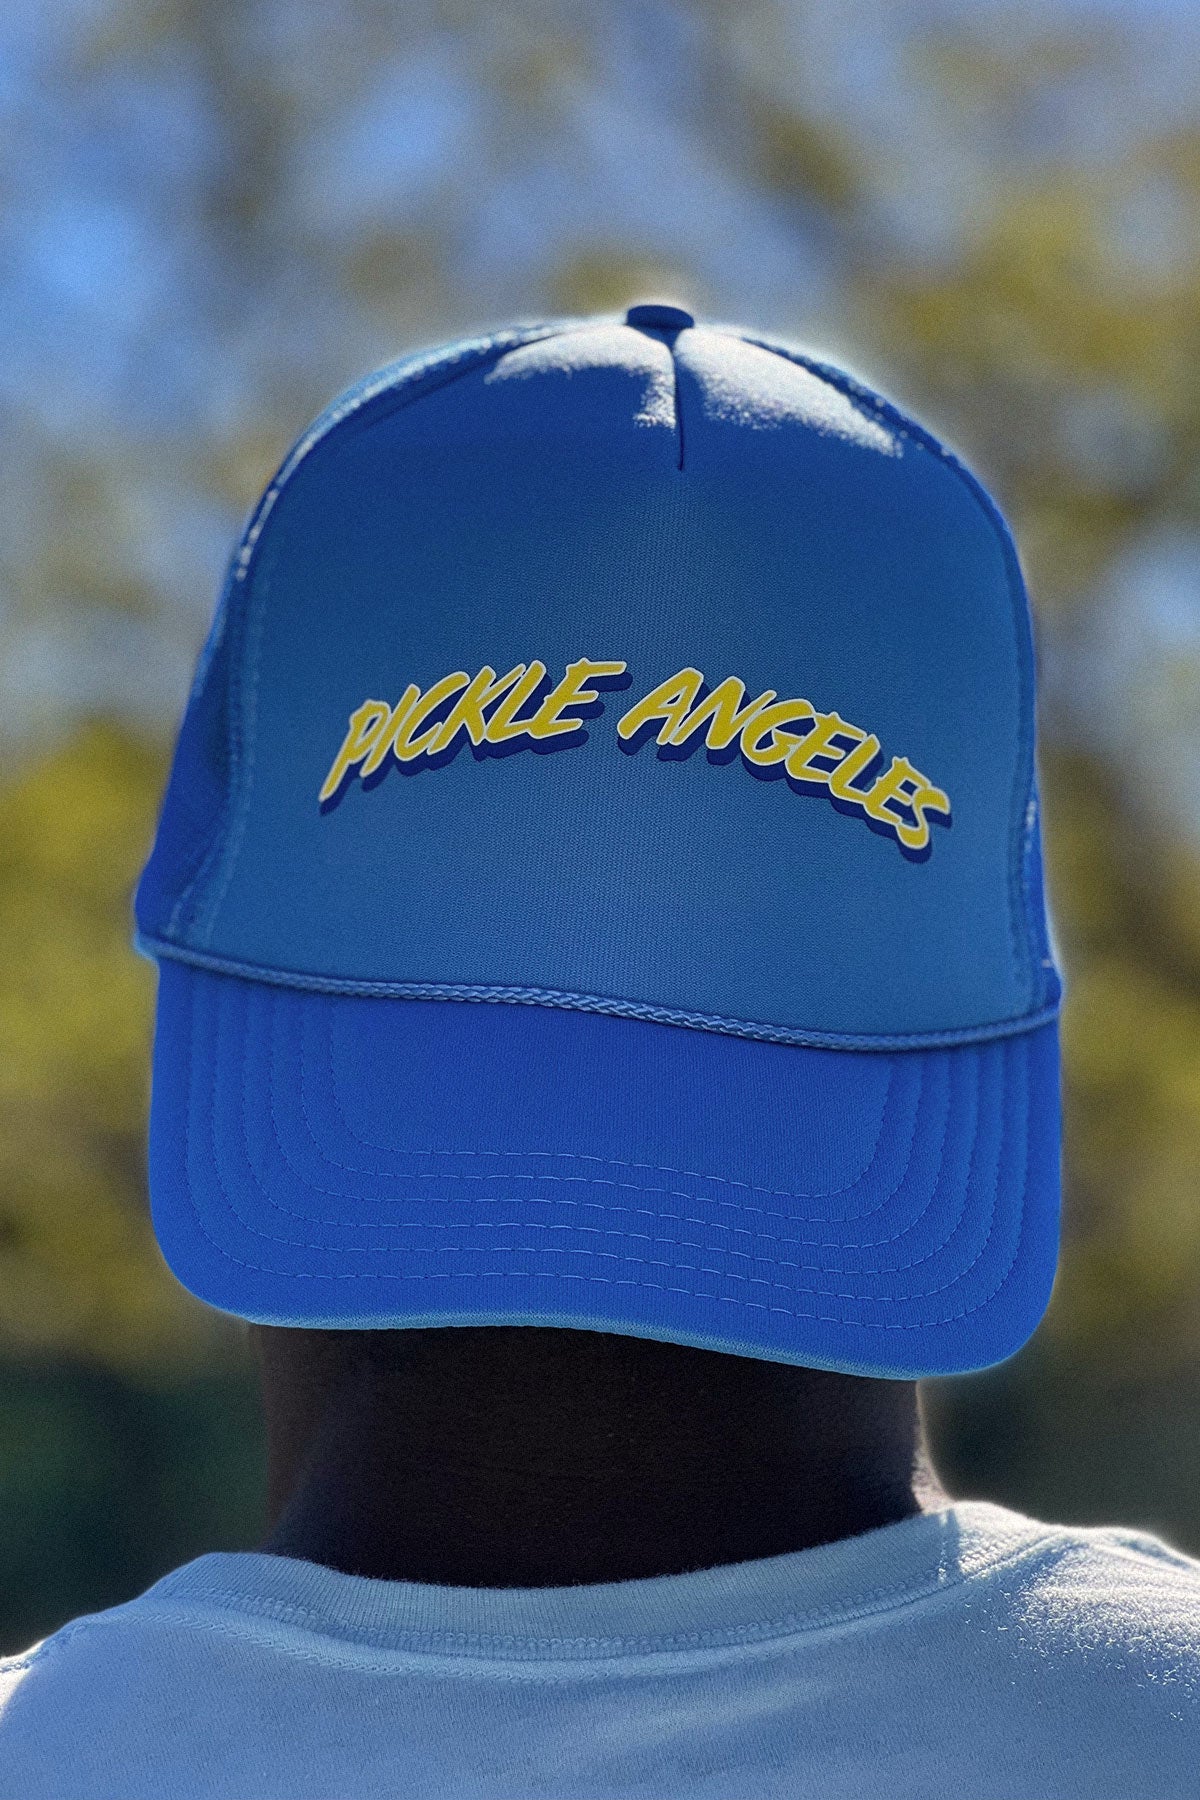 Pickle Angeles Trucker Hats